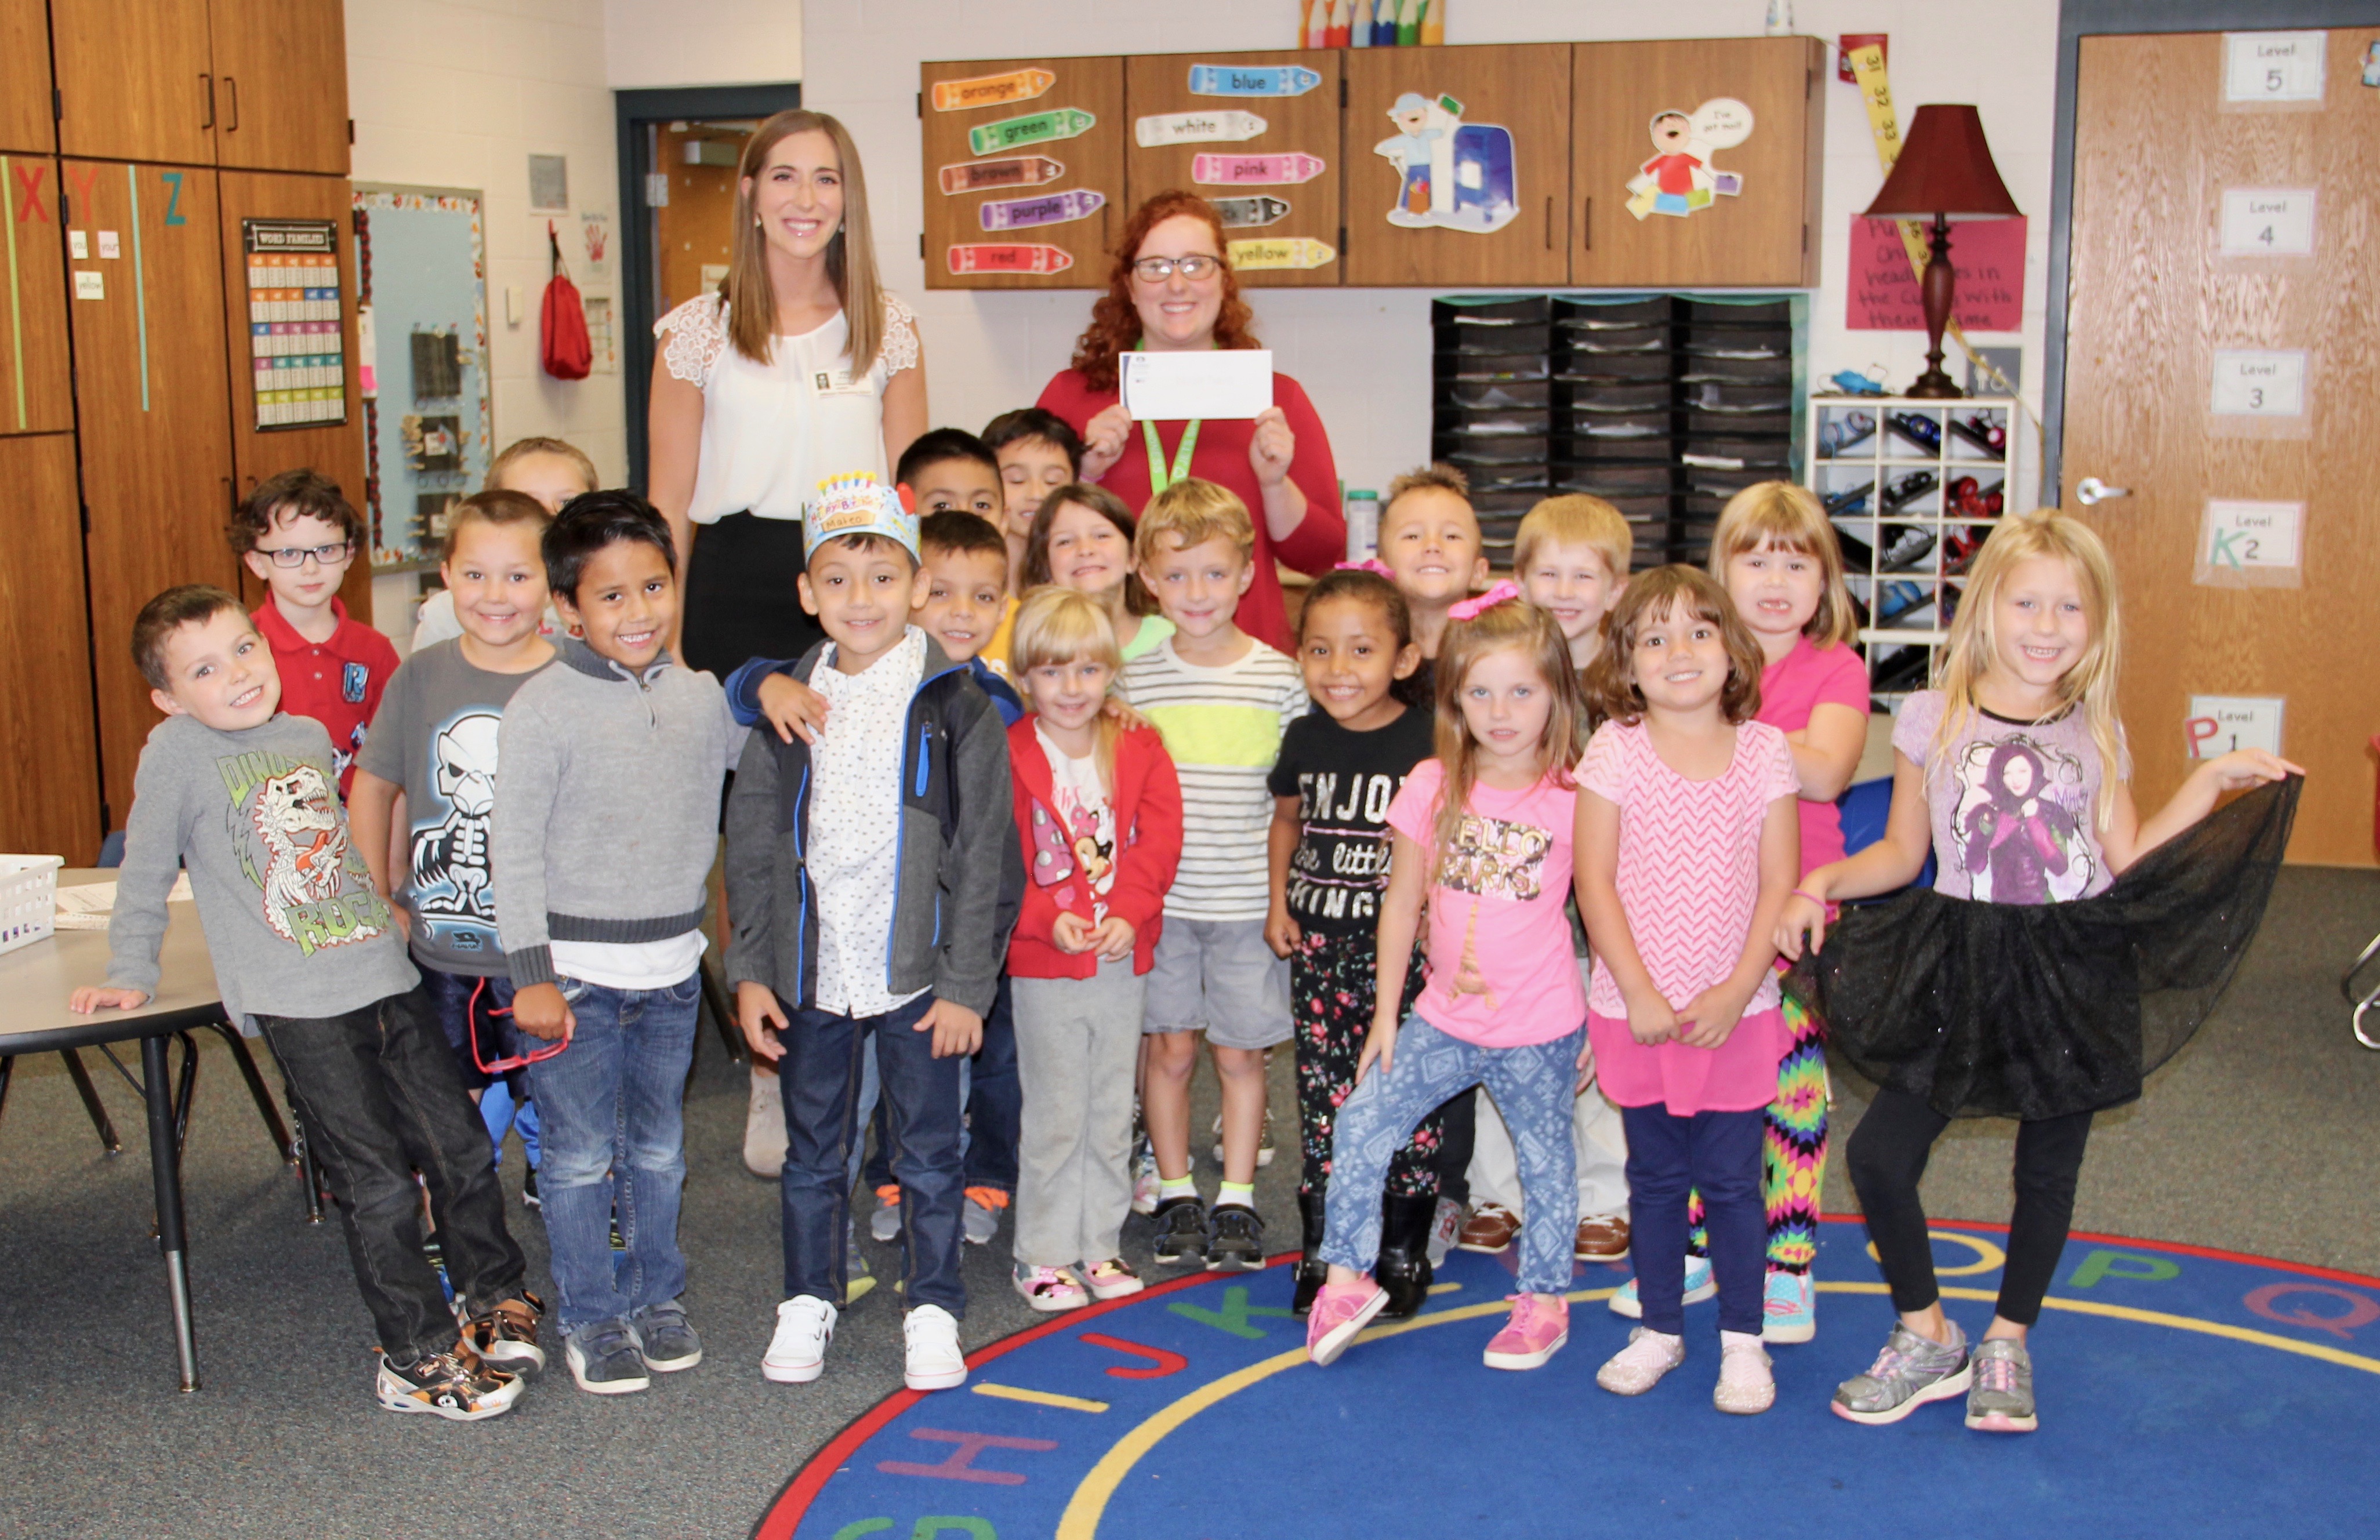 Ms. Burns, Kelsea Hueni, and kindergarten class